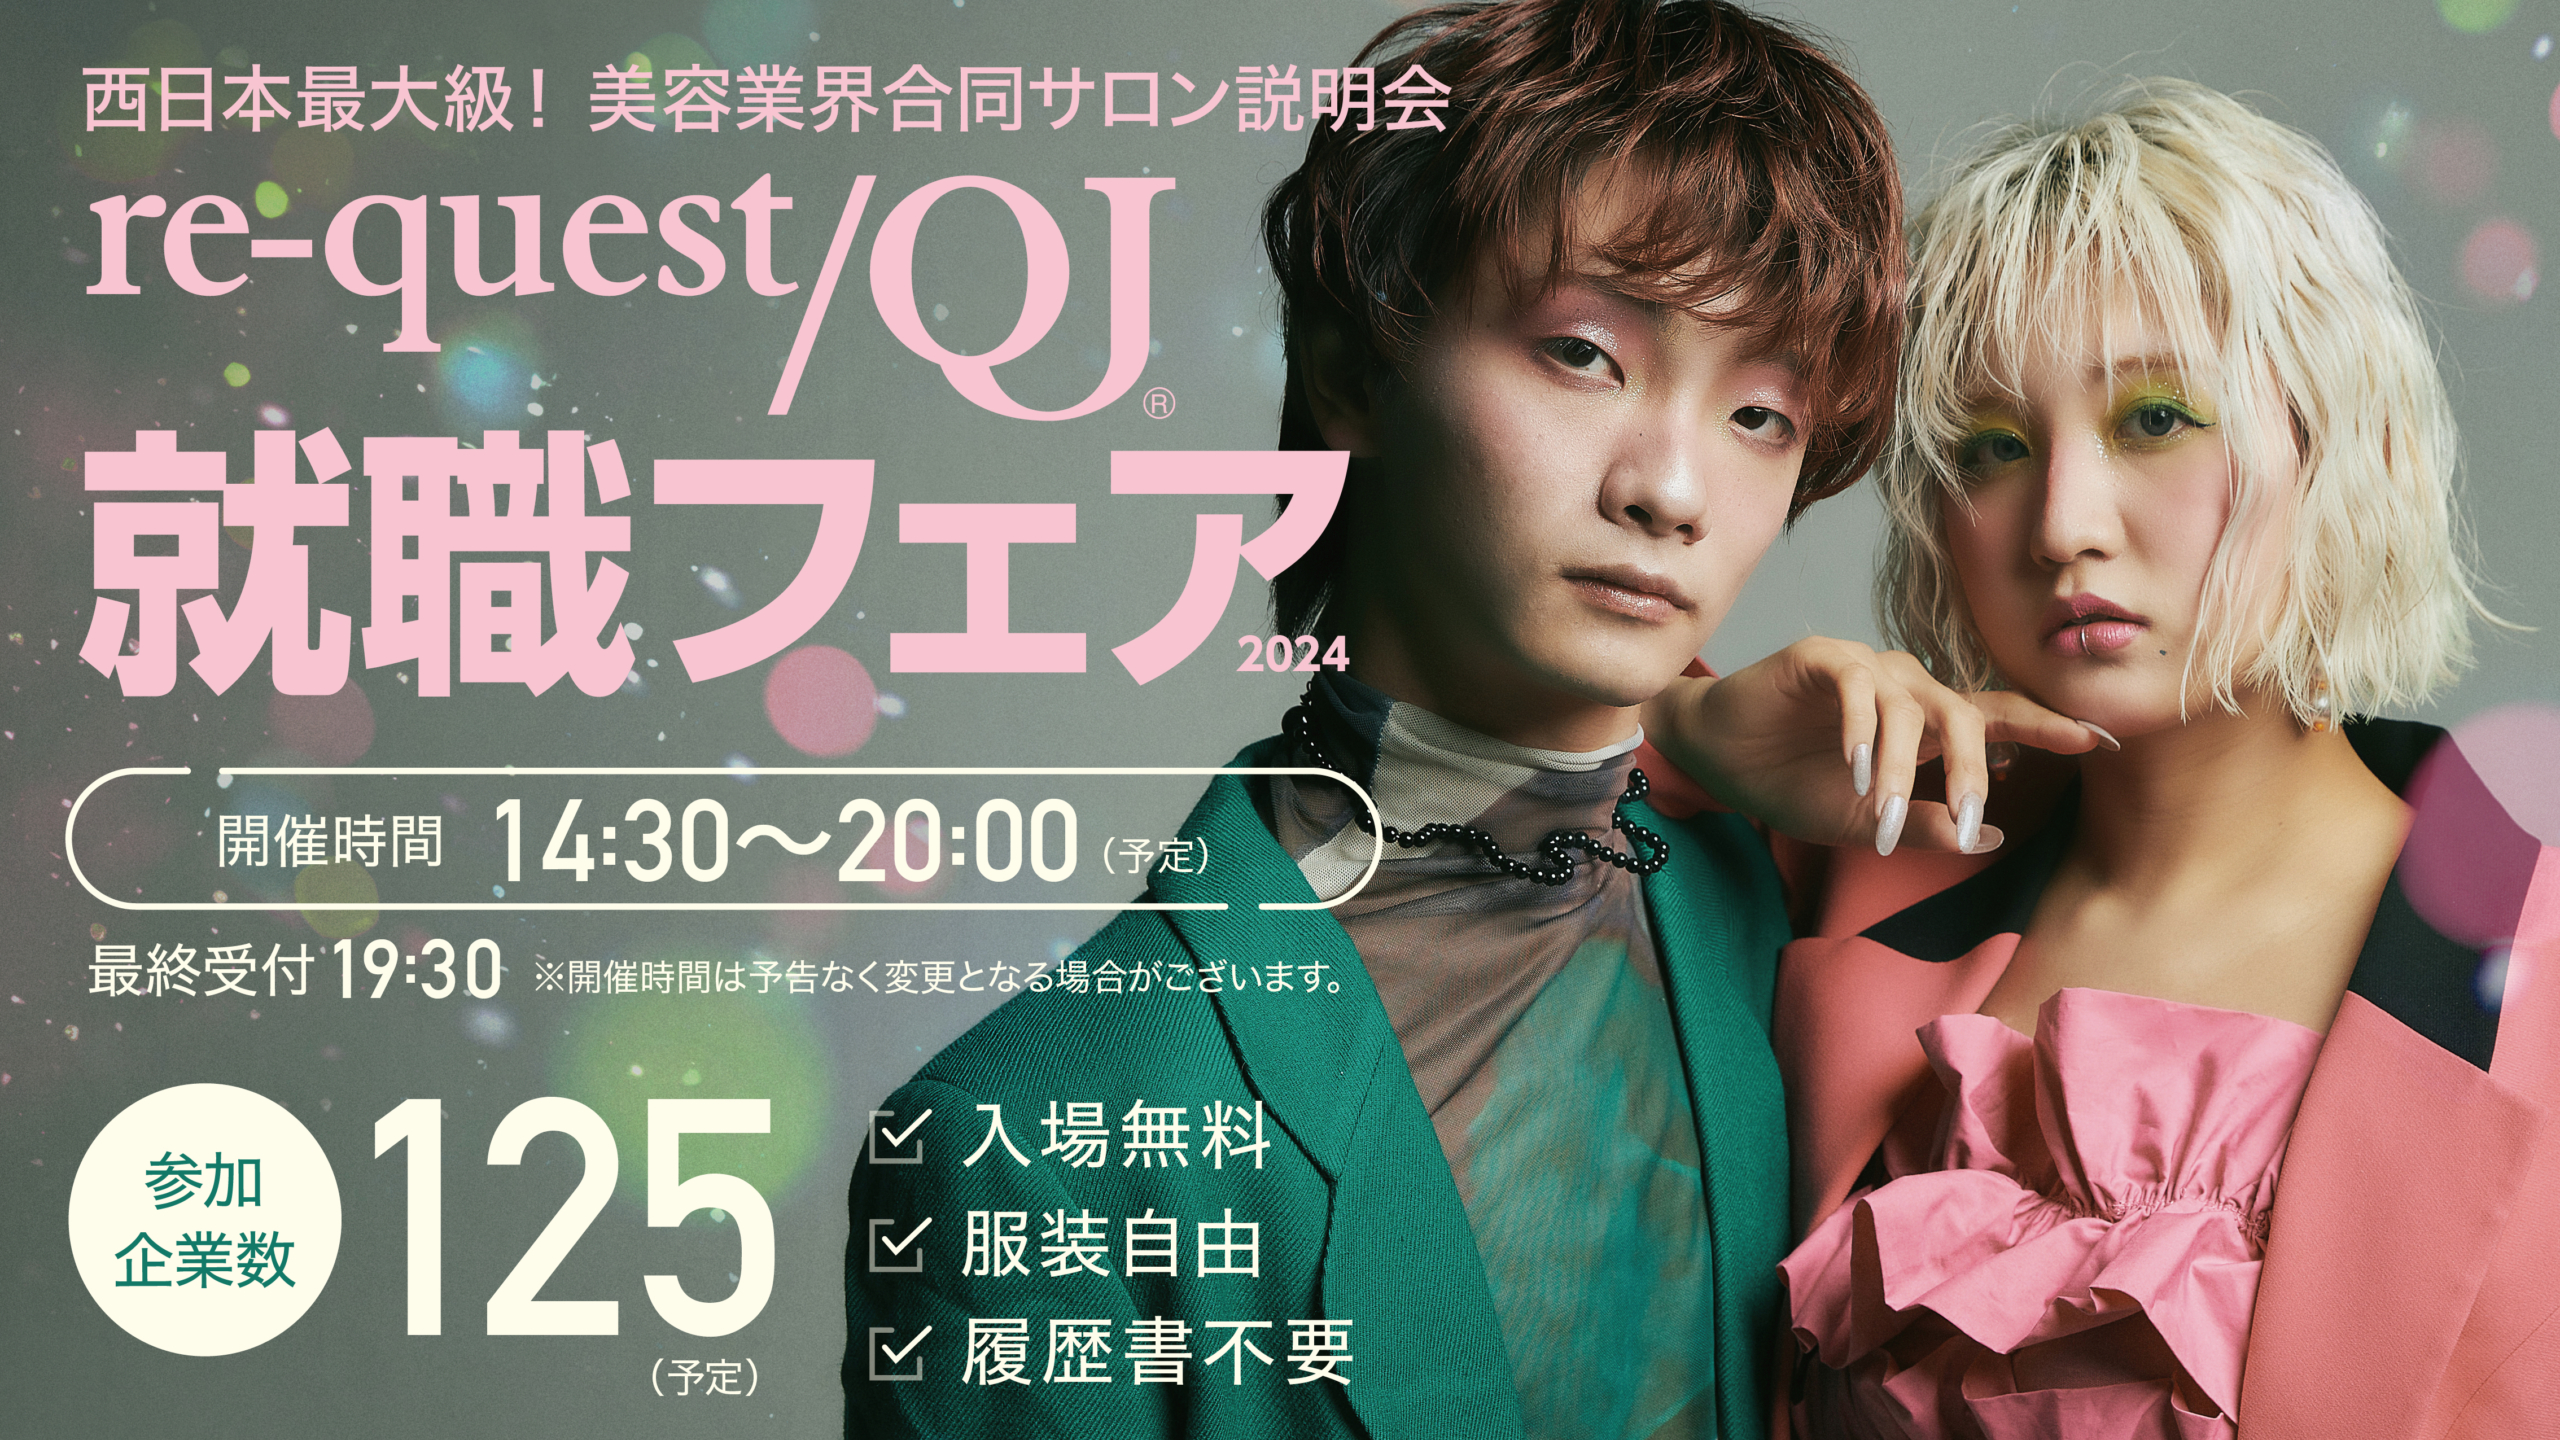 re-quest/QJ 就職フェア2024大阪